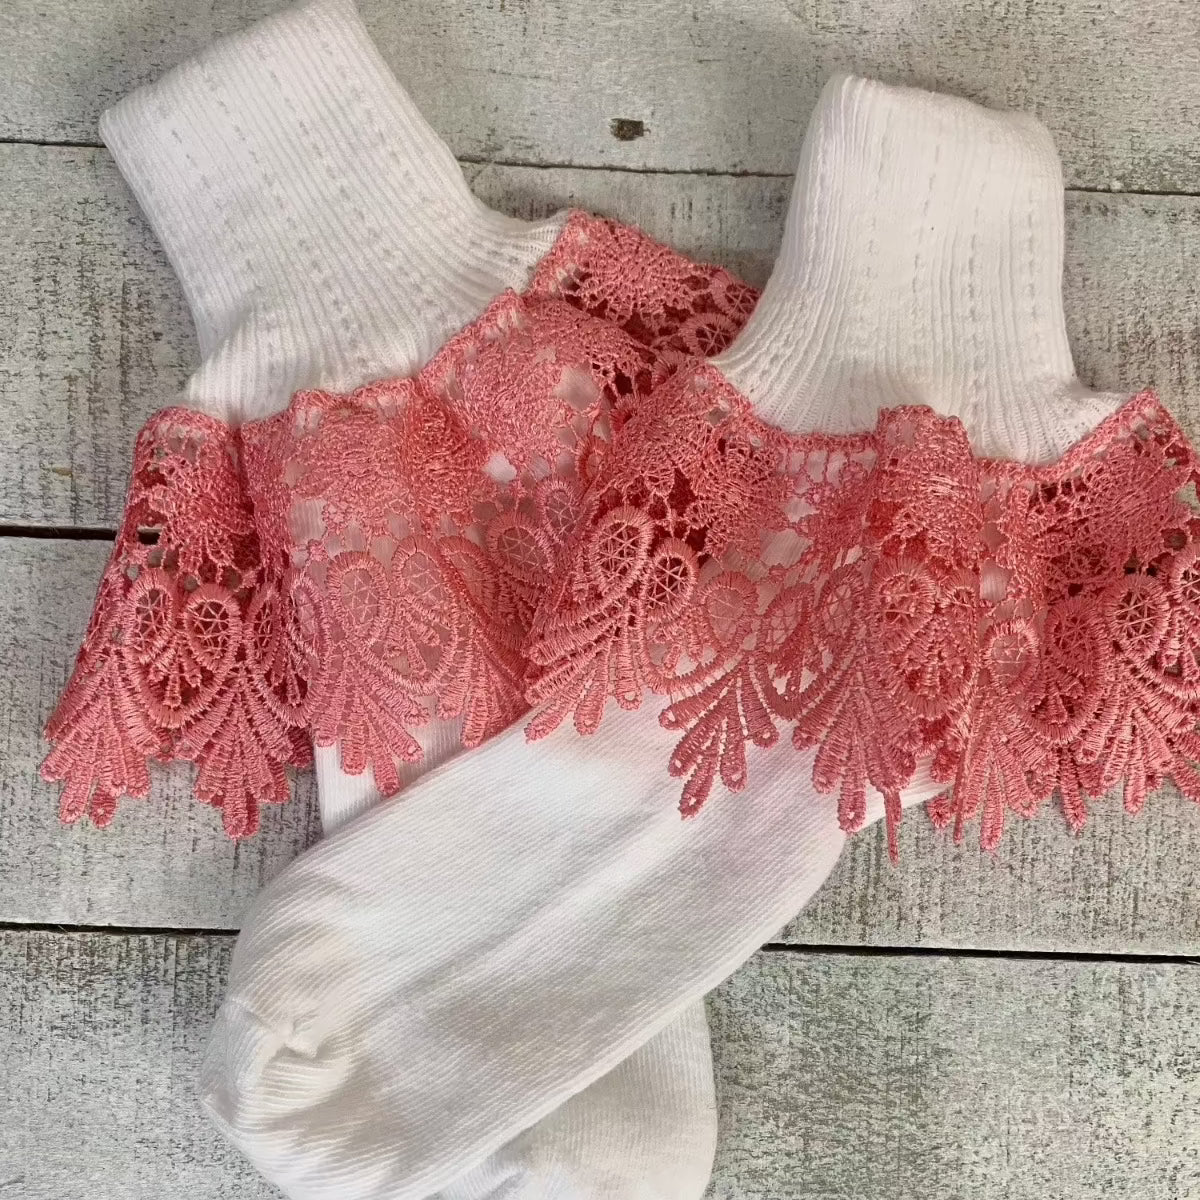 SIGNATURE lace ankle cuff socks women - white rose pink lace, ladies lace trim ruffle socks